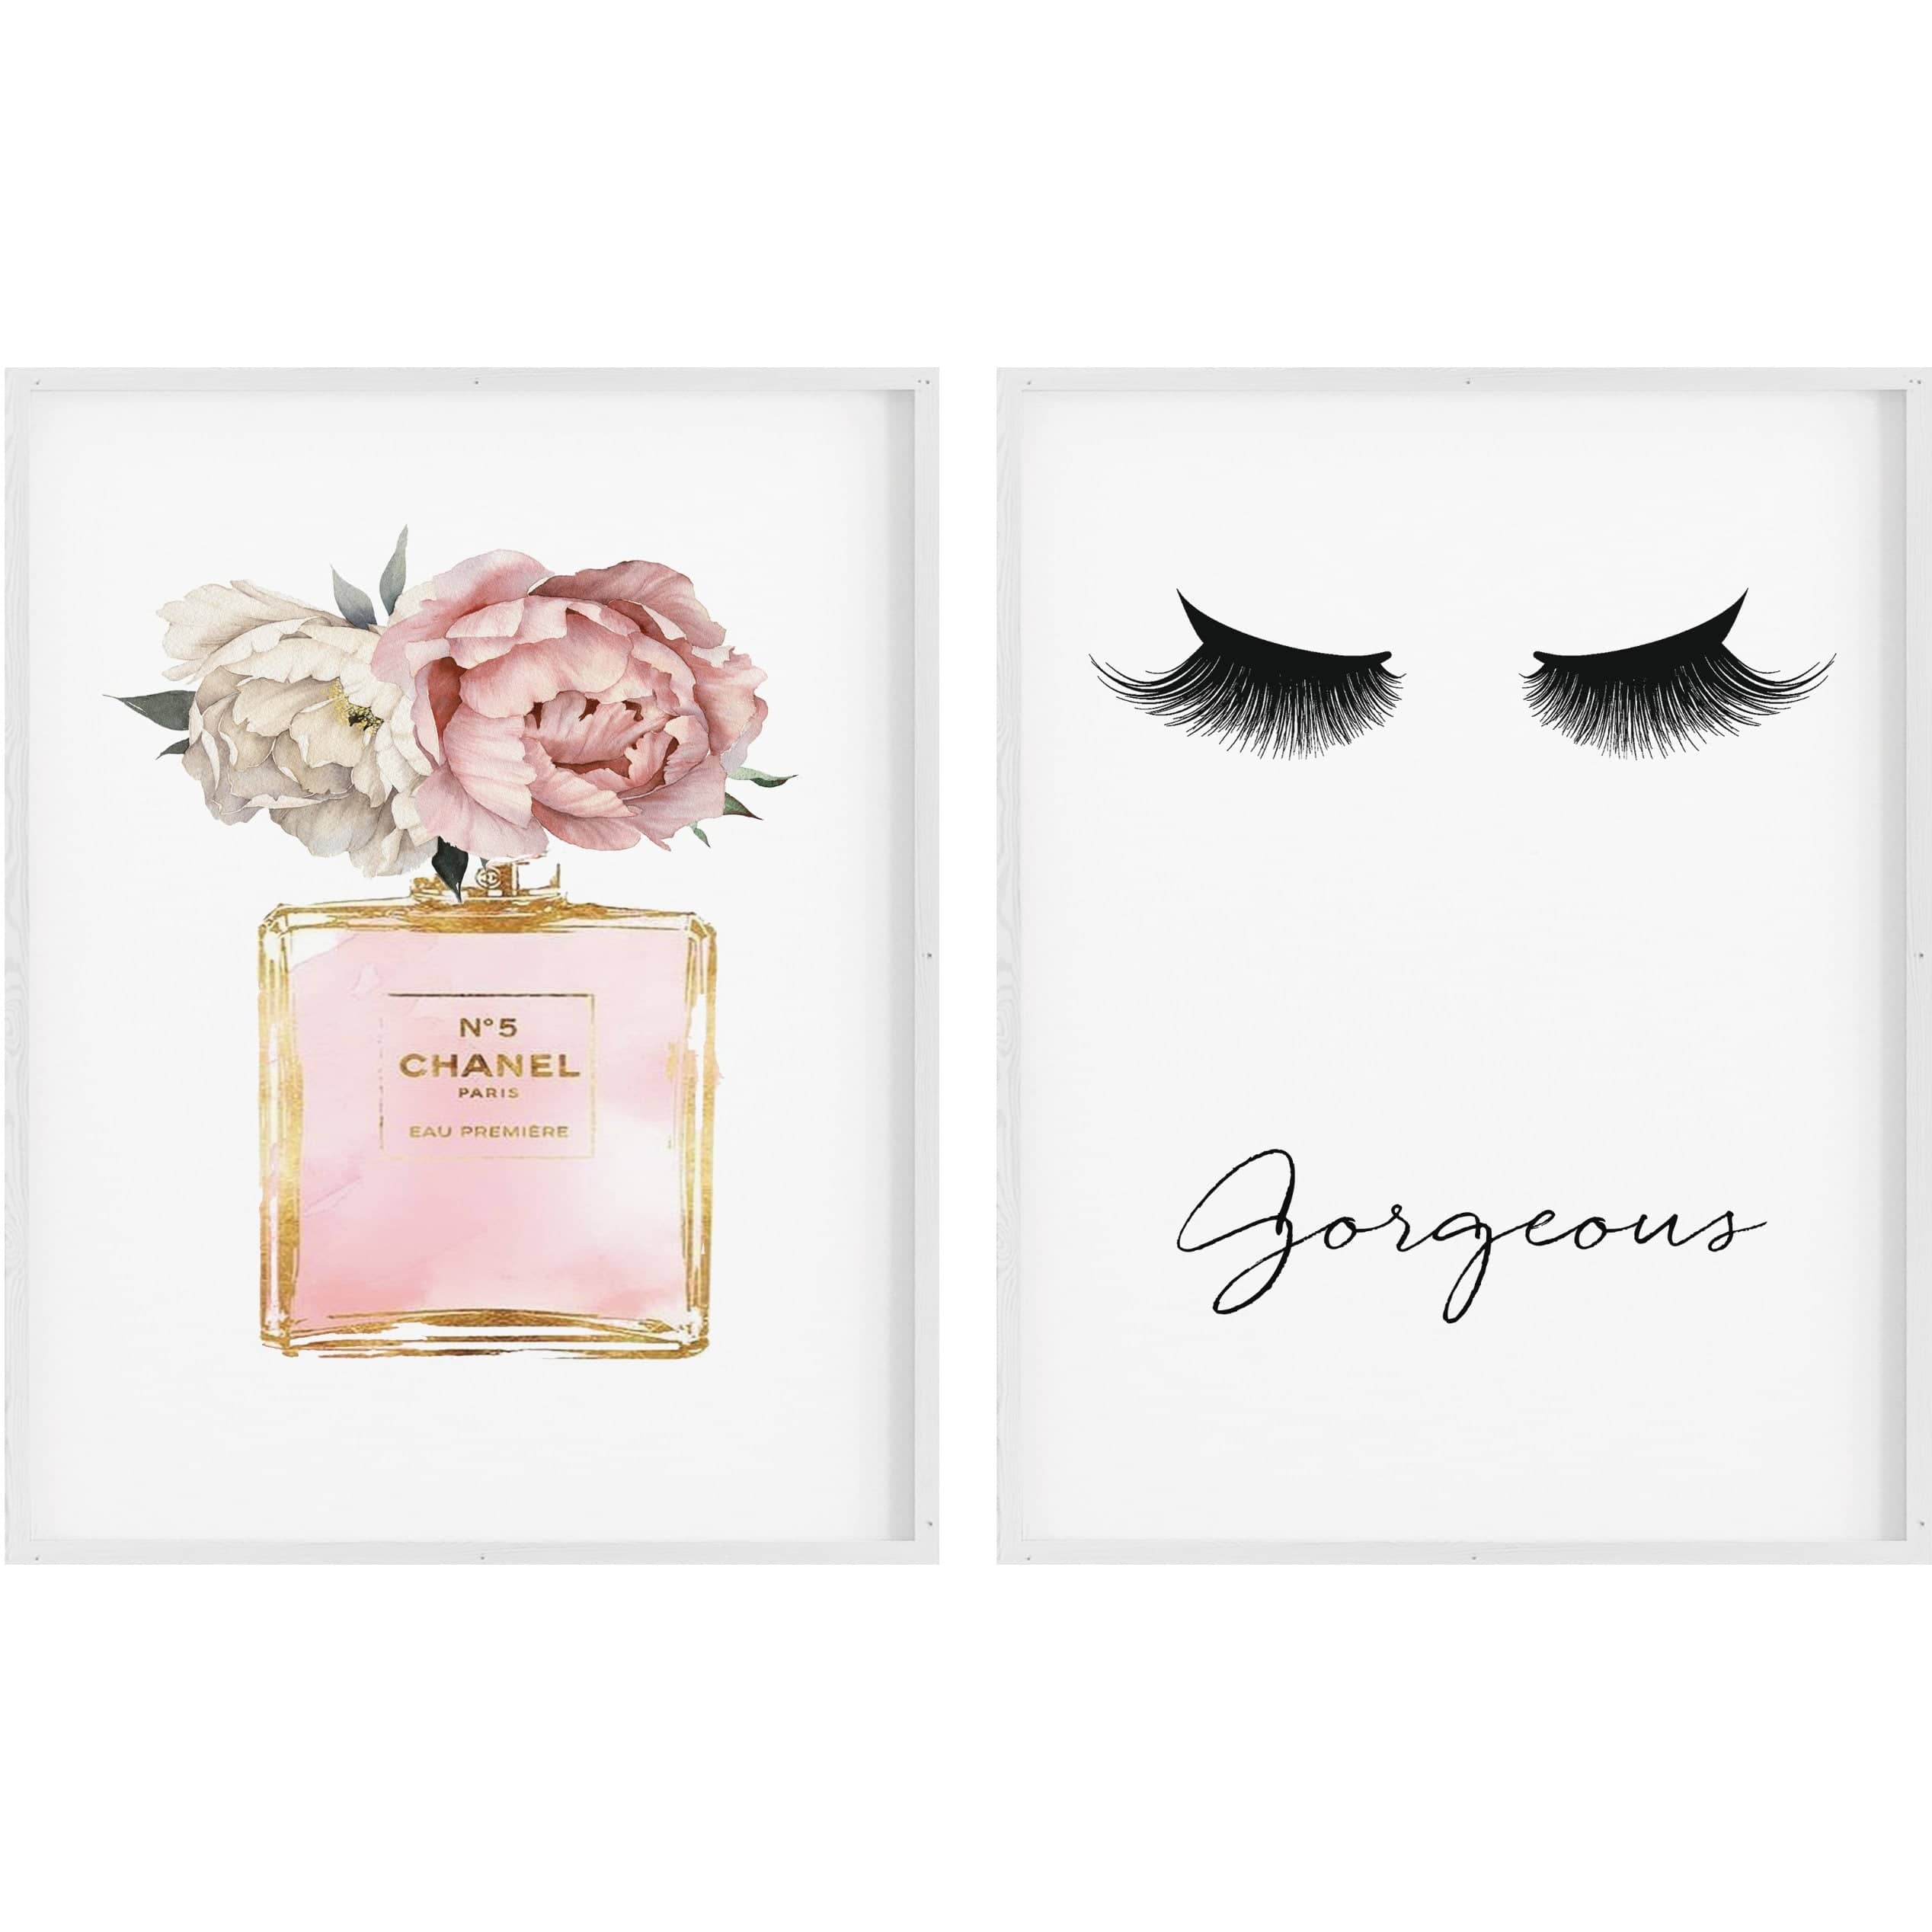 Copy of Fashion Prints, Fashion Wall Art, Set of 2, Blush Pink Floral Peony Perfume and Eyelashes-Papier Art Designs